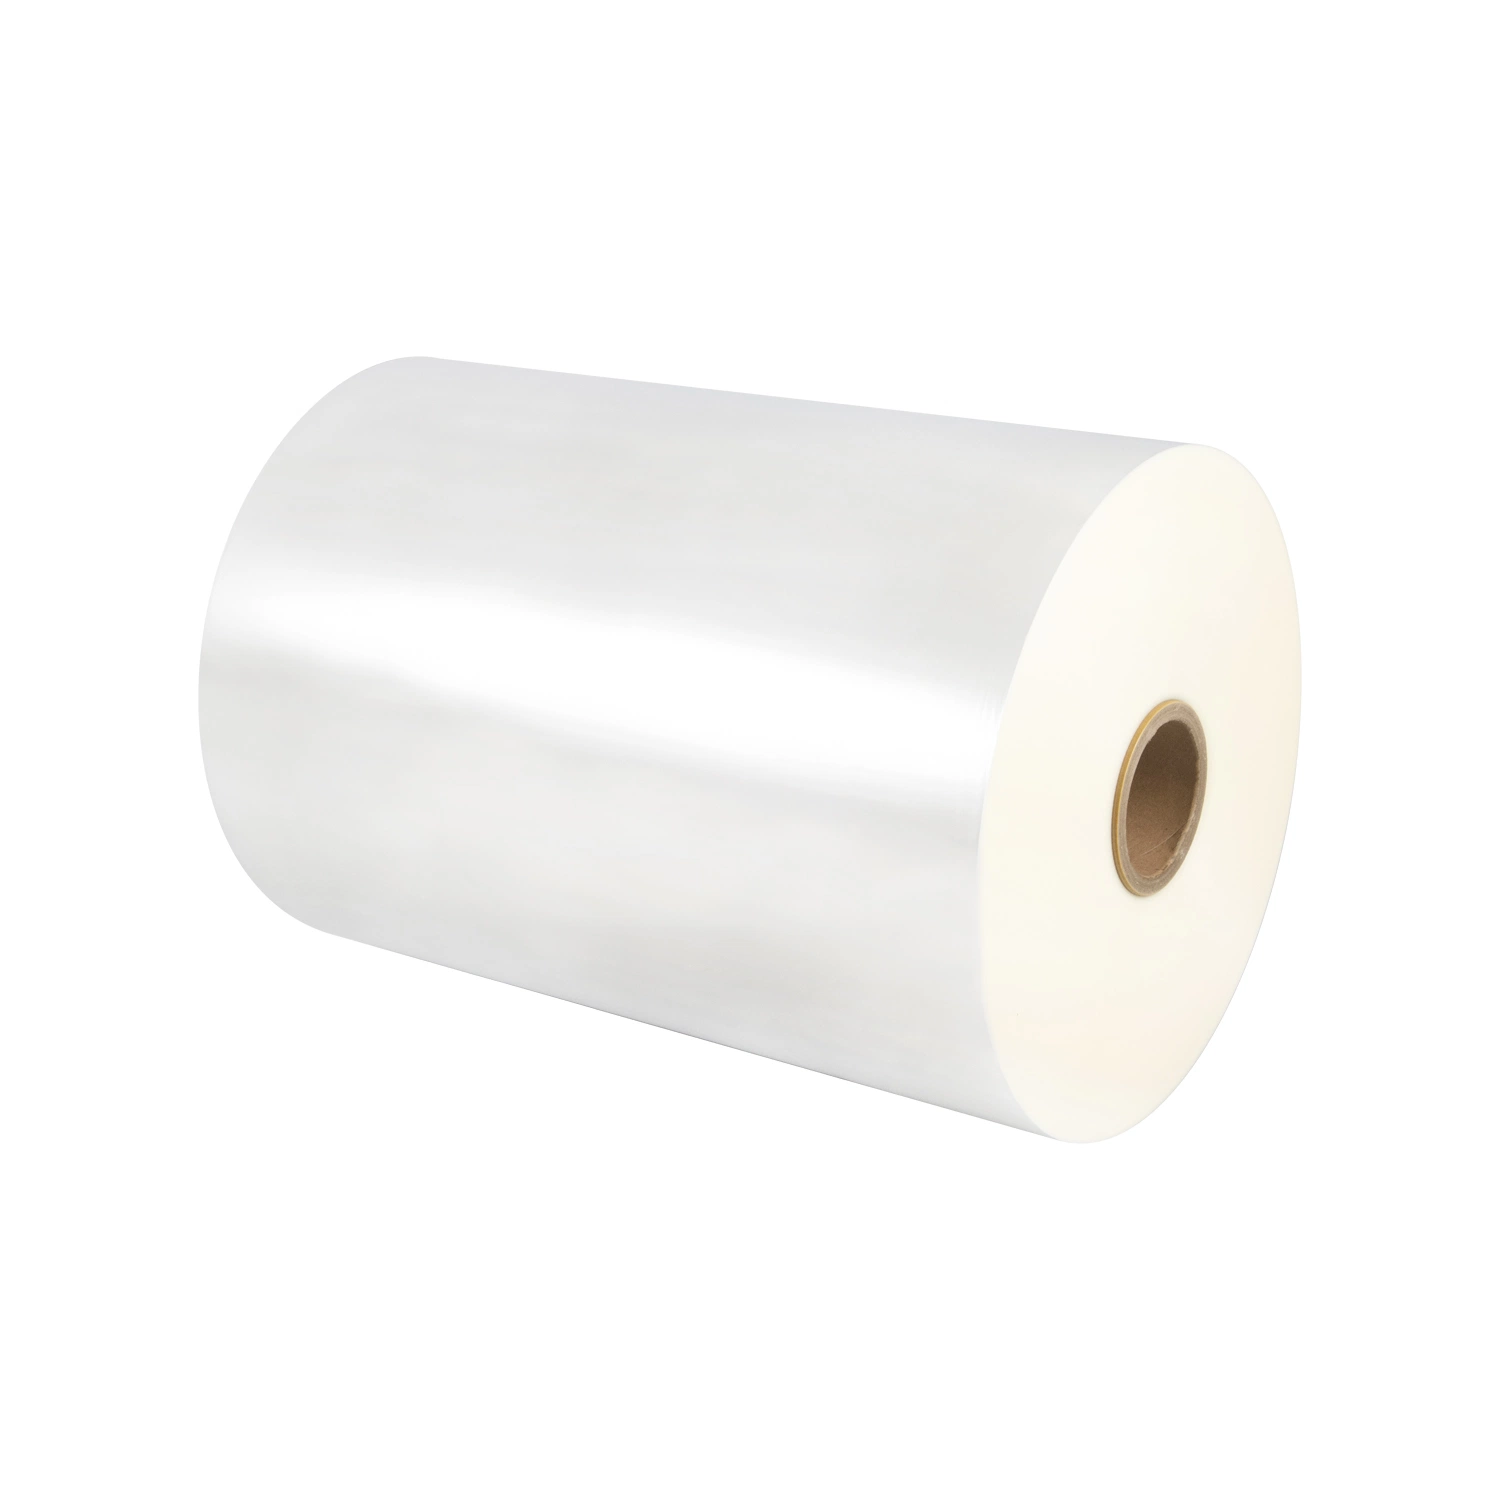 Packaging Material of Nylon/BOPA for Customer Printing and Laminating